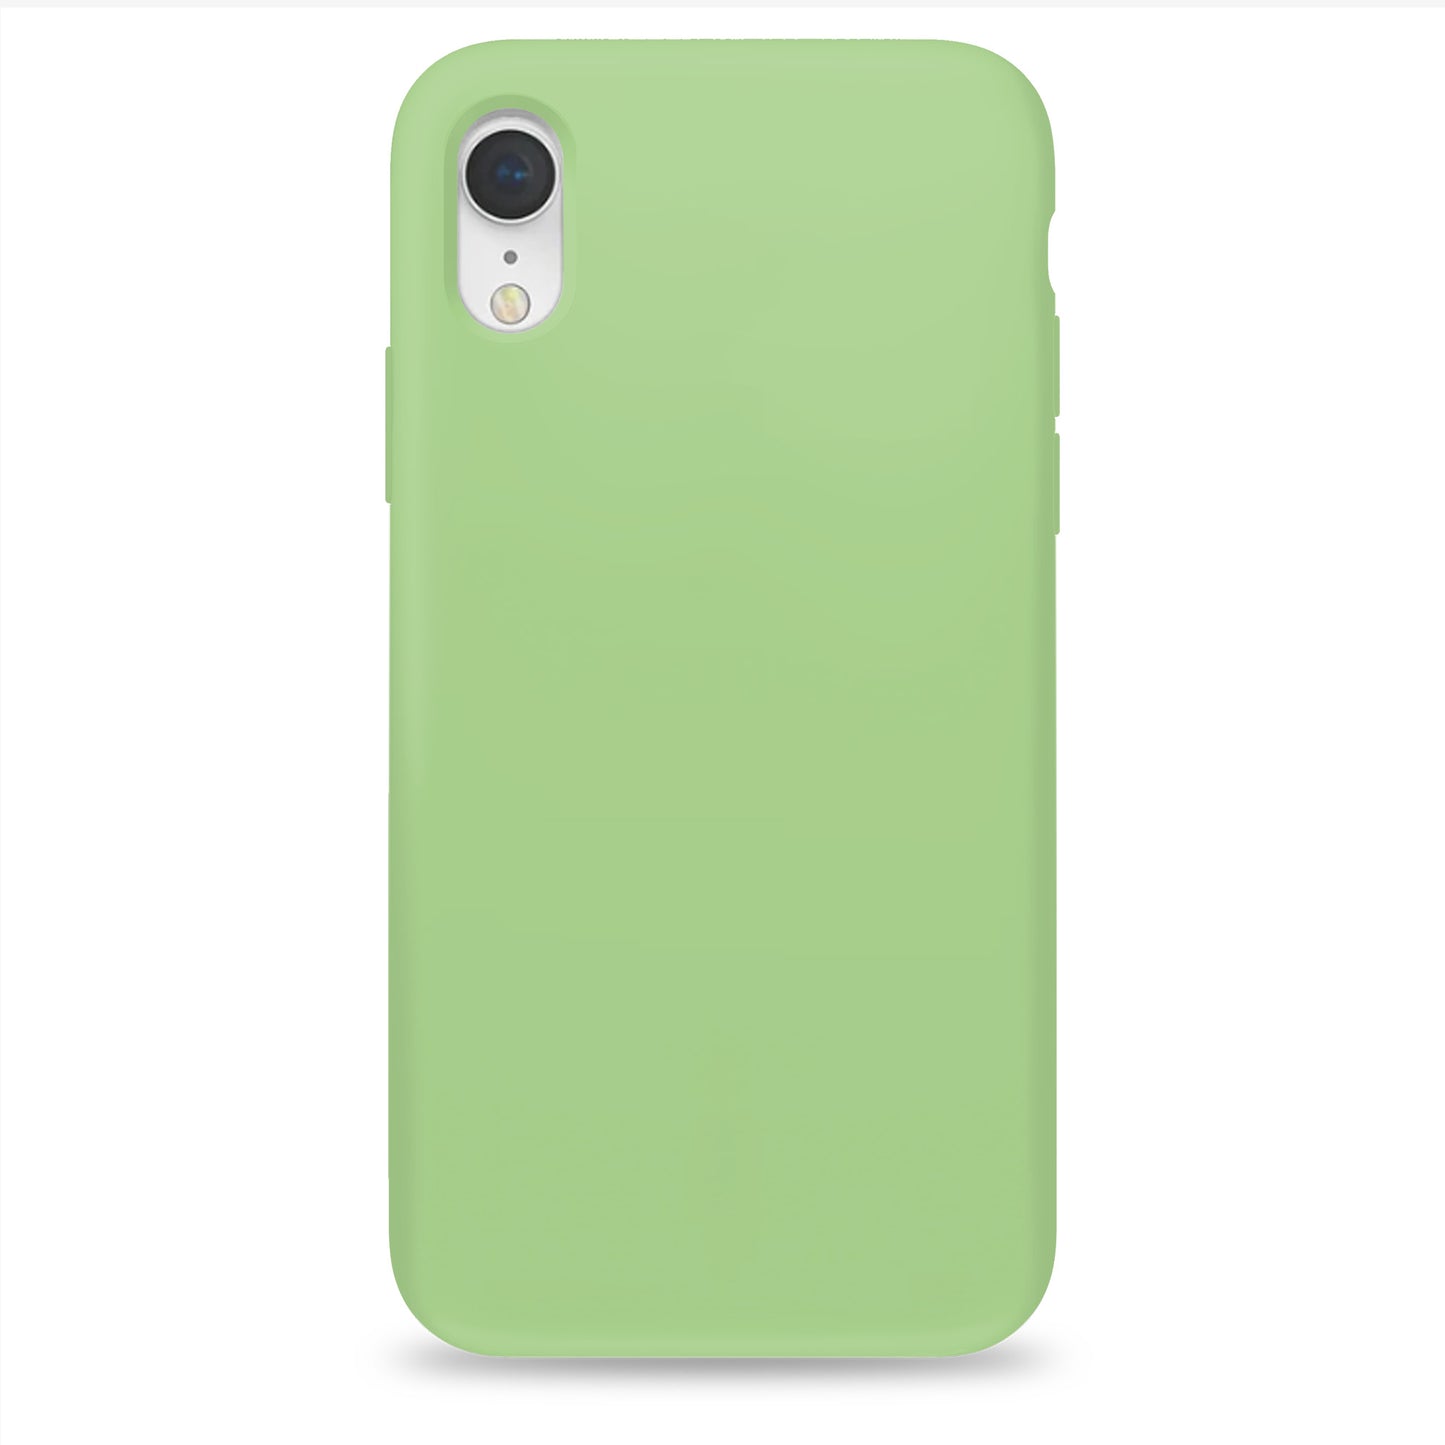 Matcha Green Silikon Hülle für iPhone